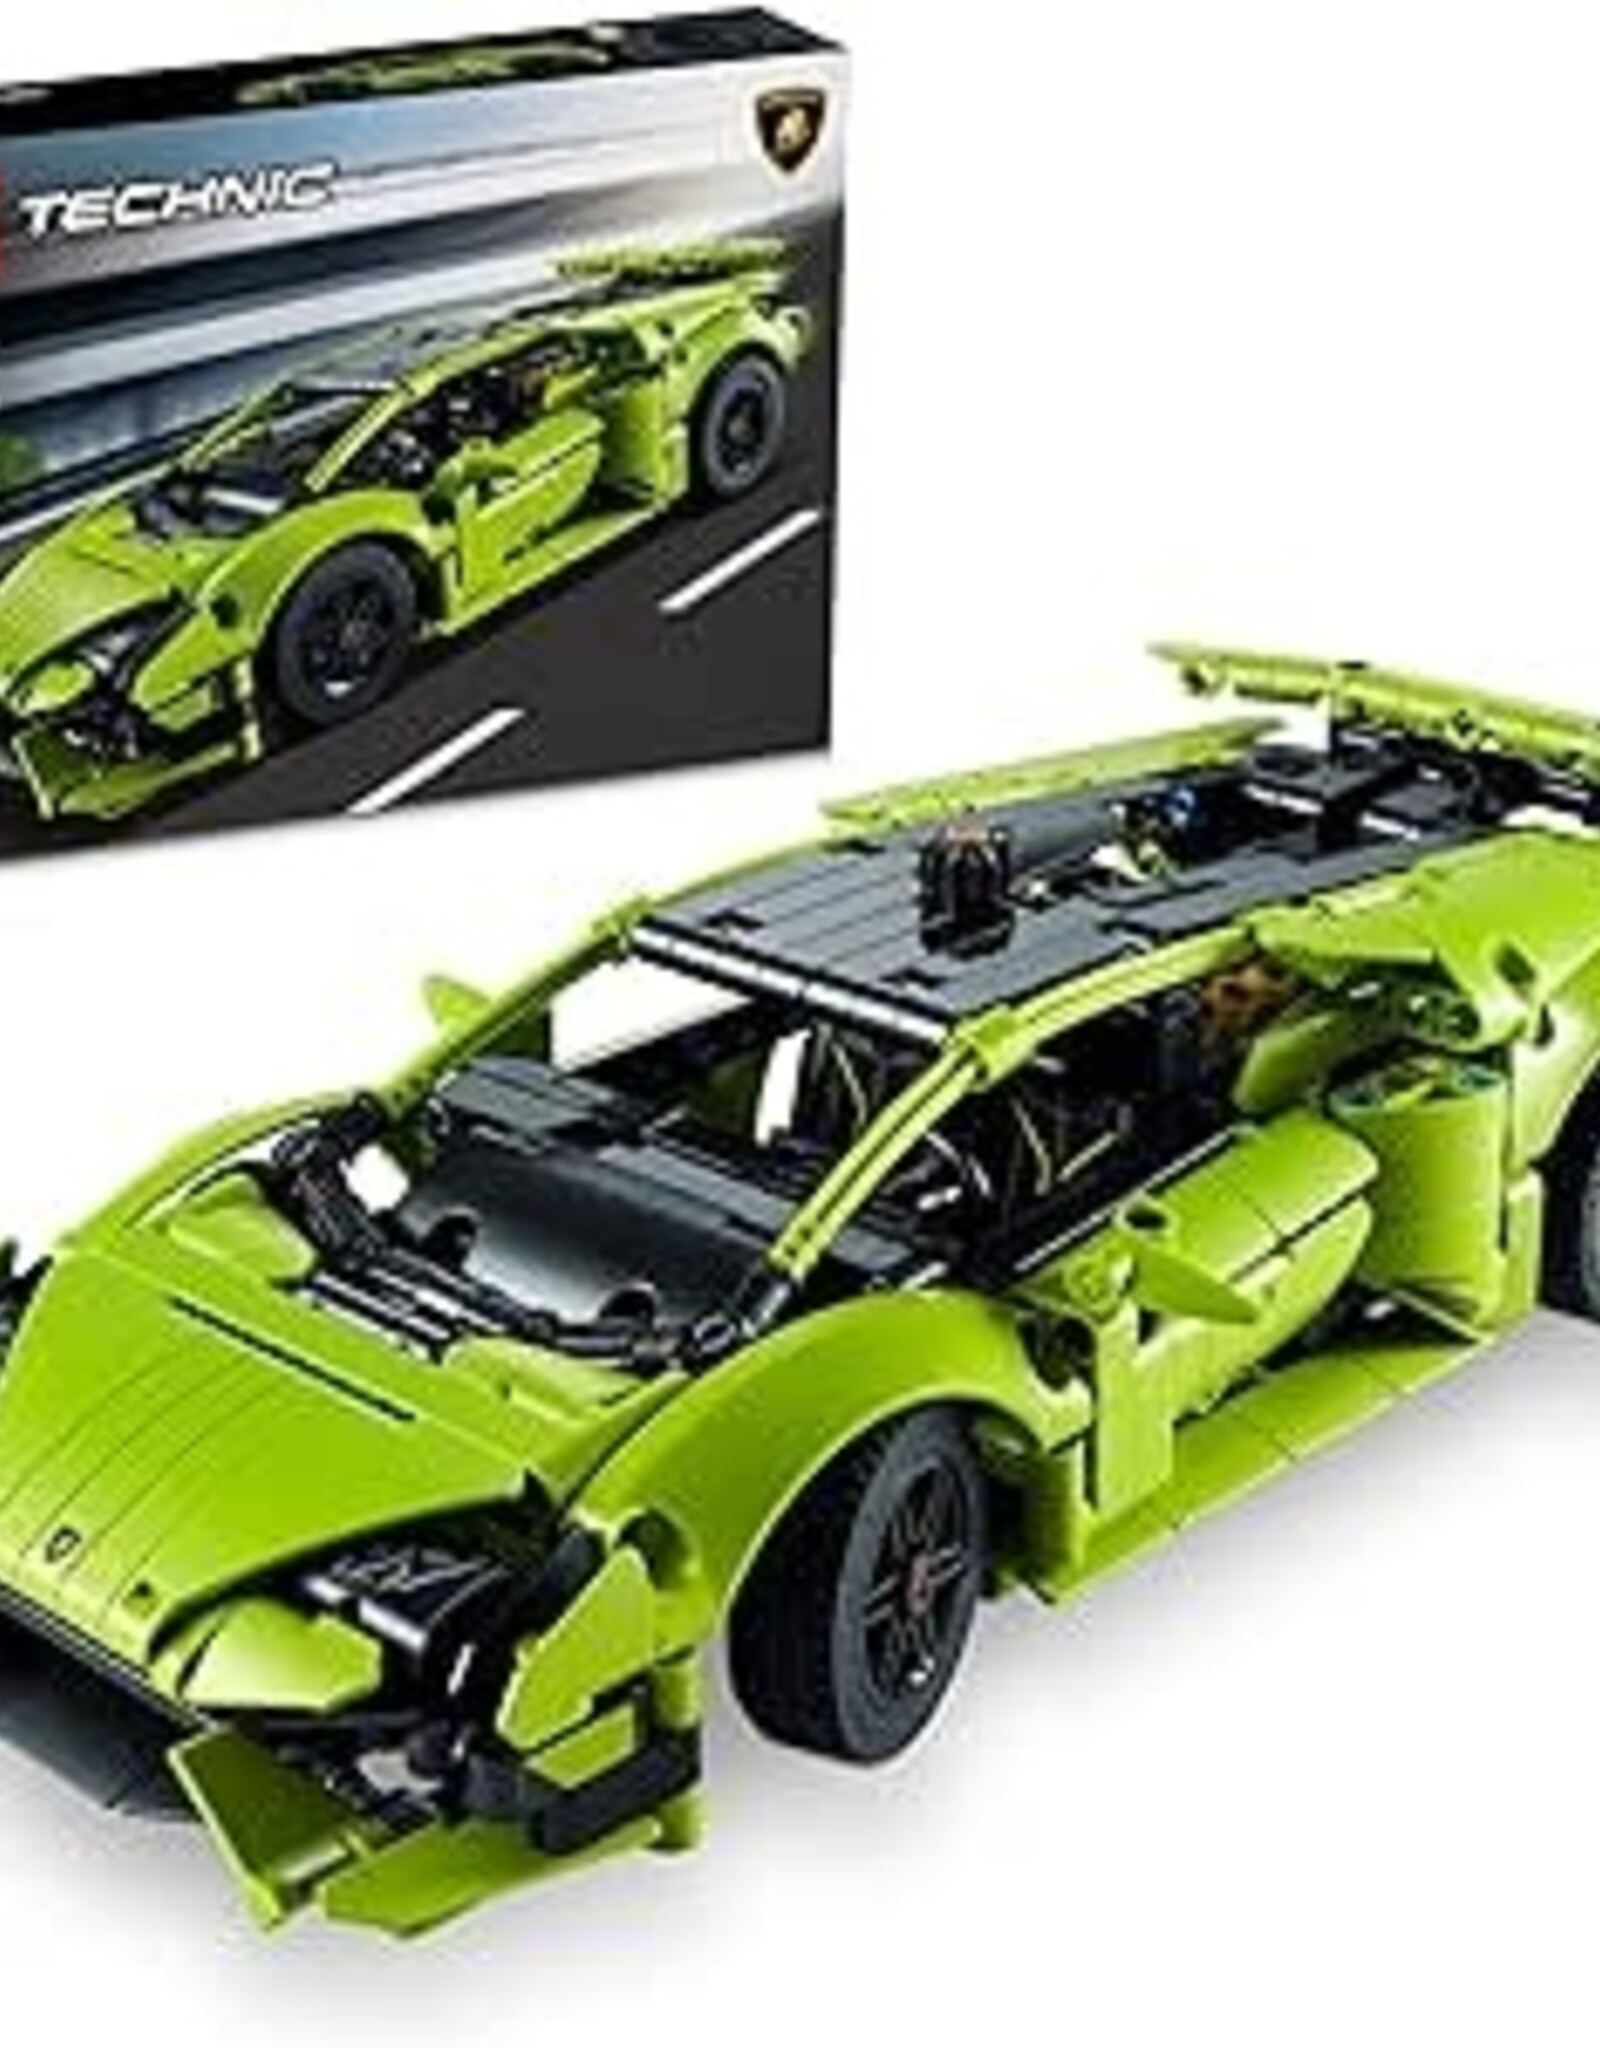 LEGO Lego Technic Lamborghini Hurcán Technica